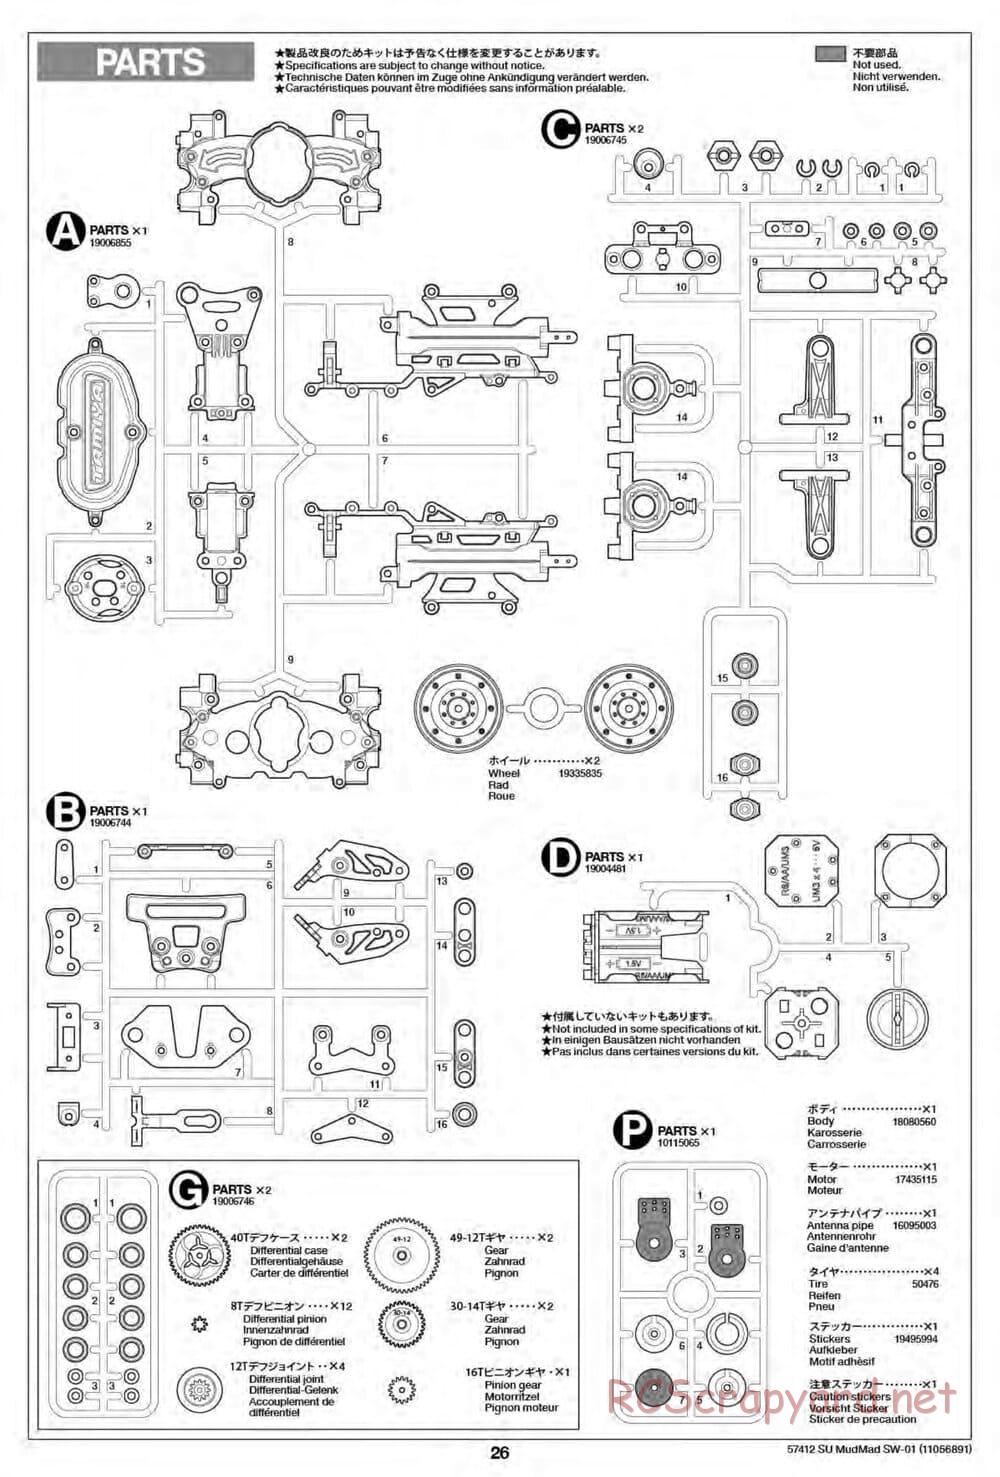 Tamiya - MudMad - SW-01 Chassis - Manual - Page 26